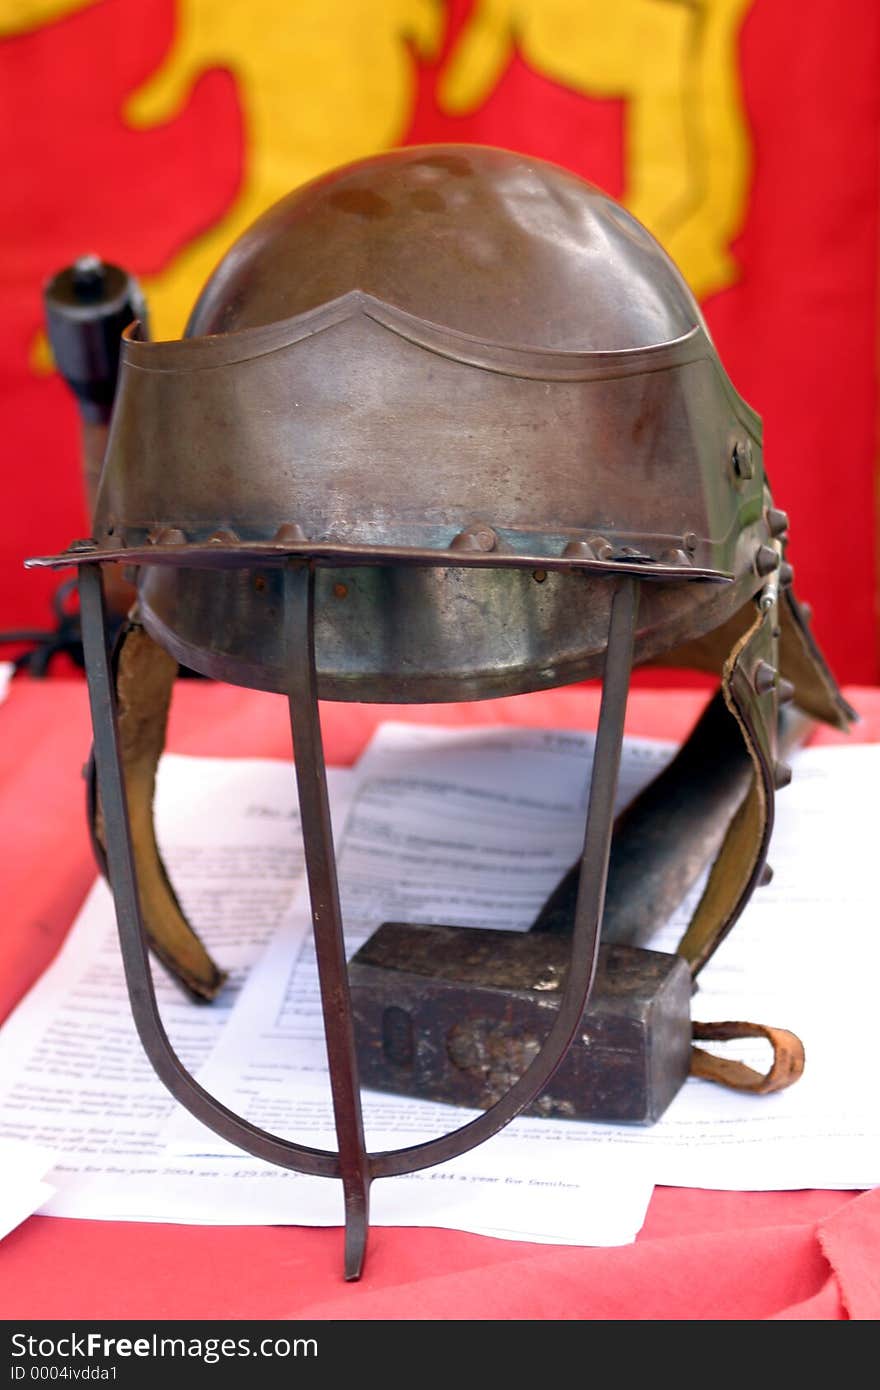 Engish civil war cavaliers' helmet, 17th century. Engish civil war cavaliers' helmet, 17th century.